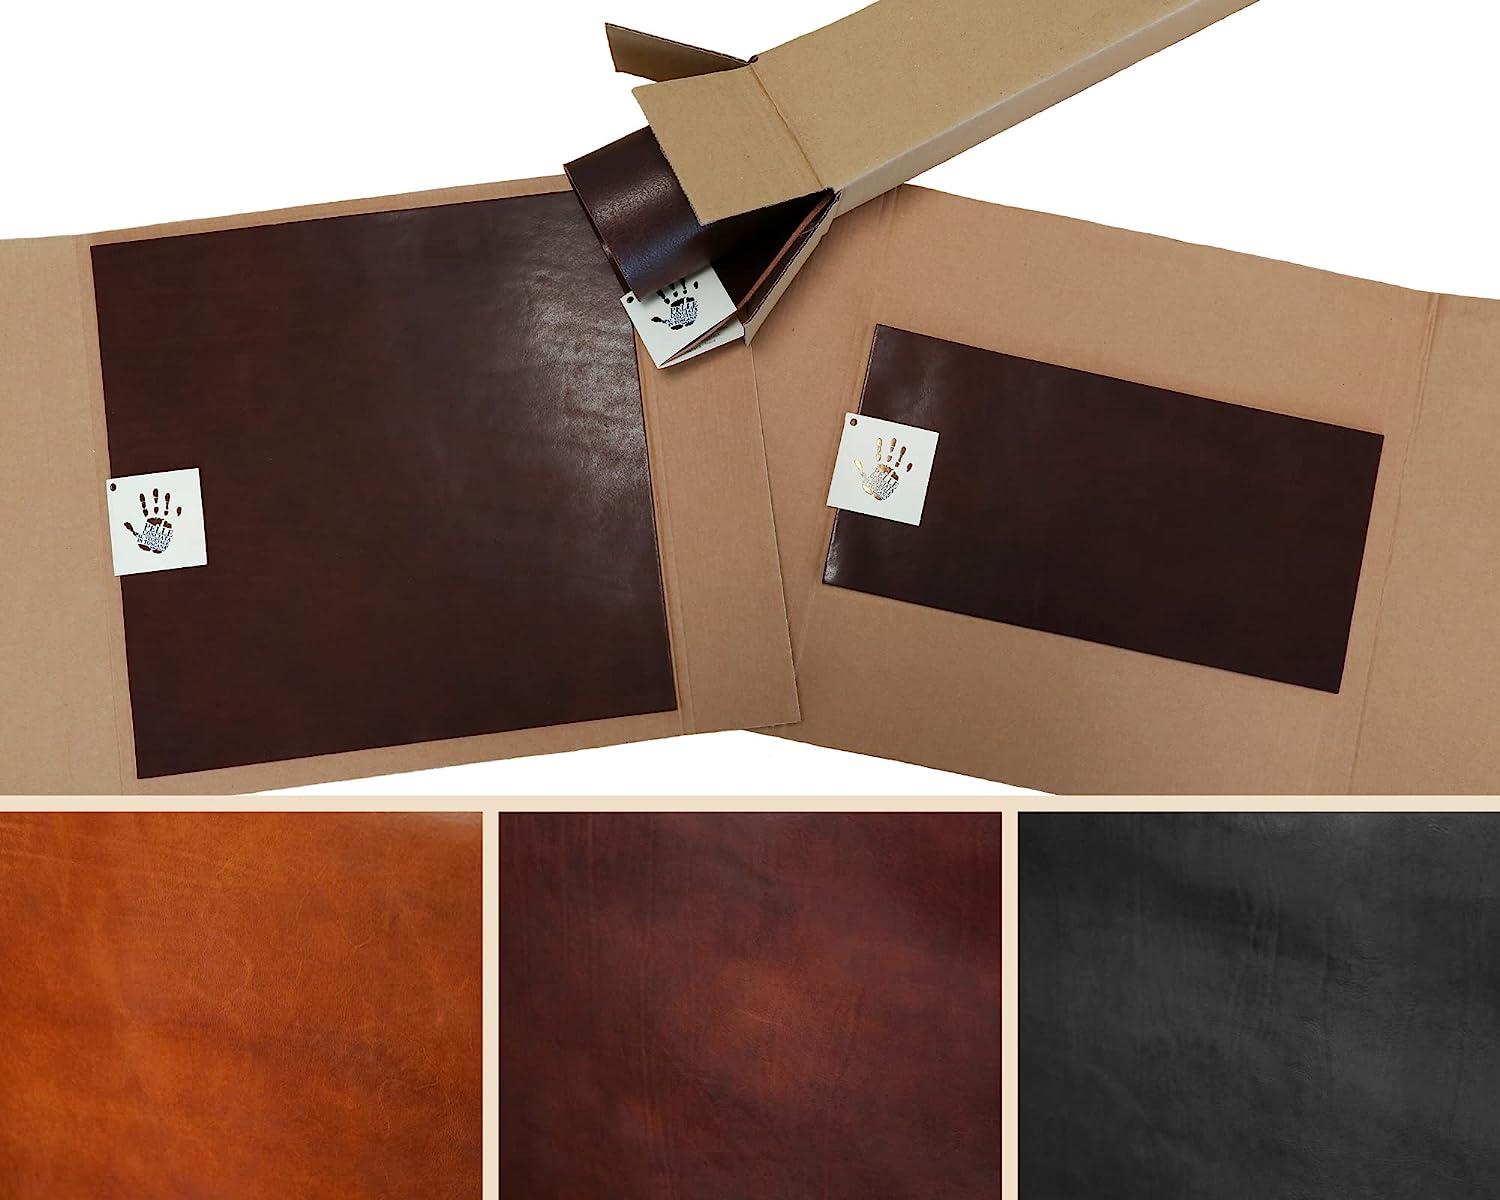  Leather Sheets Pre Cut 6x12.Premium Natural Grain